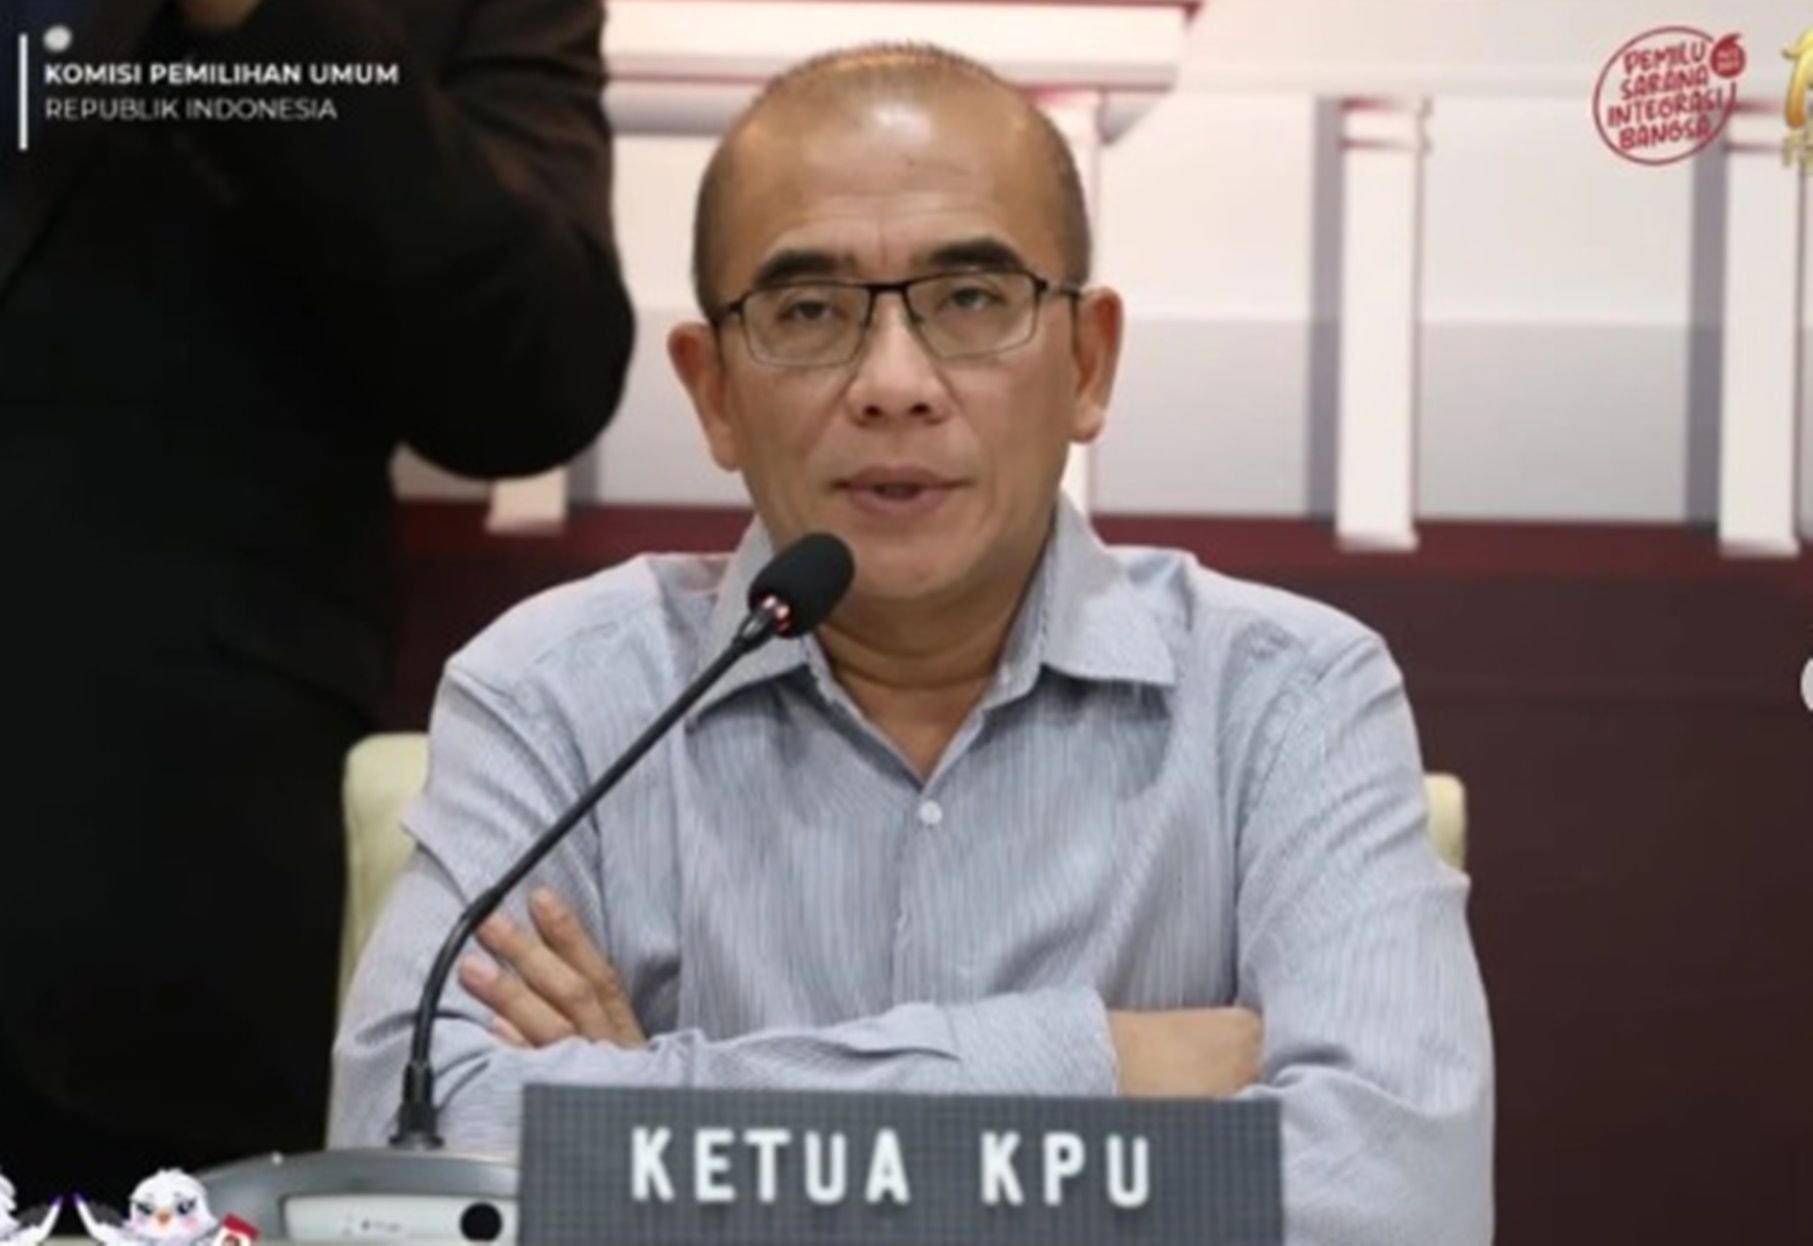 Ketua KPU Hasyim Asy'ari menjelaskan rencana pembentukan badan ad hoc Pilkada 2024